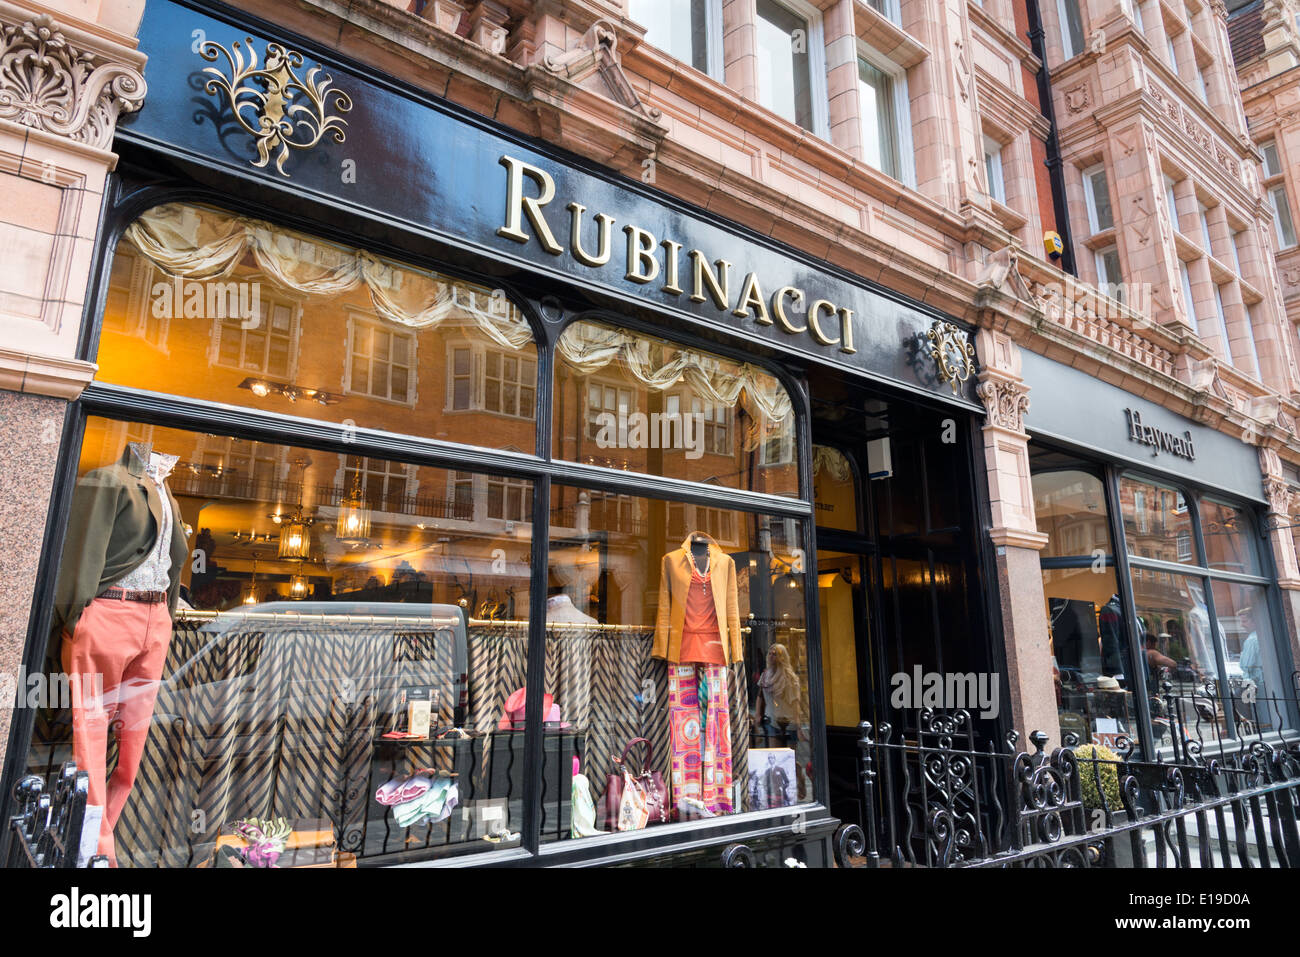 Rubinacci, Mount Street, Mayfair, London, England, UK Banque D'Images